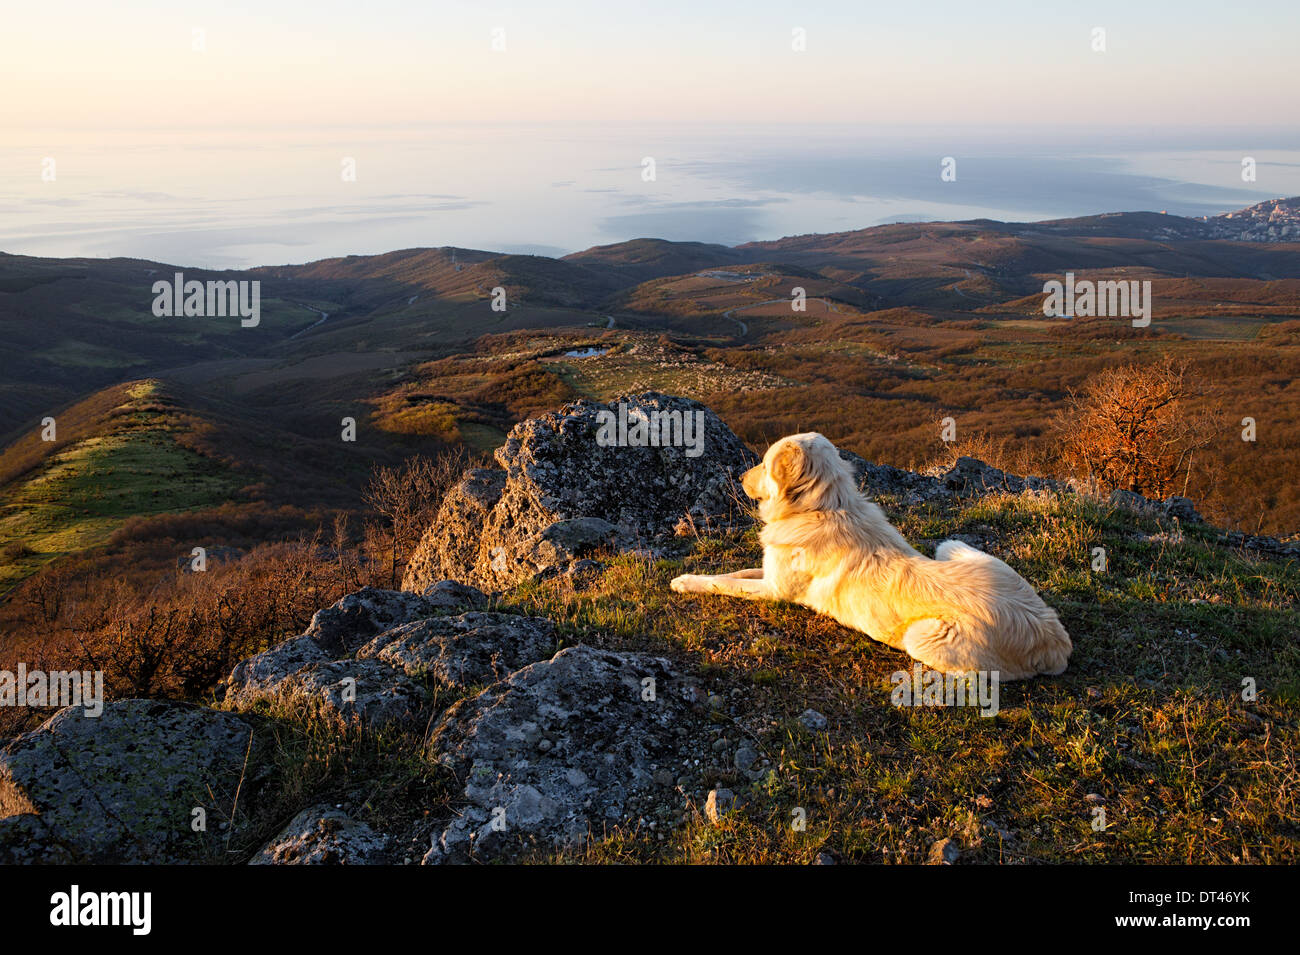 Big shepherd on the rocky mountain hill Stock Photo